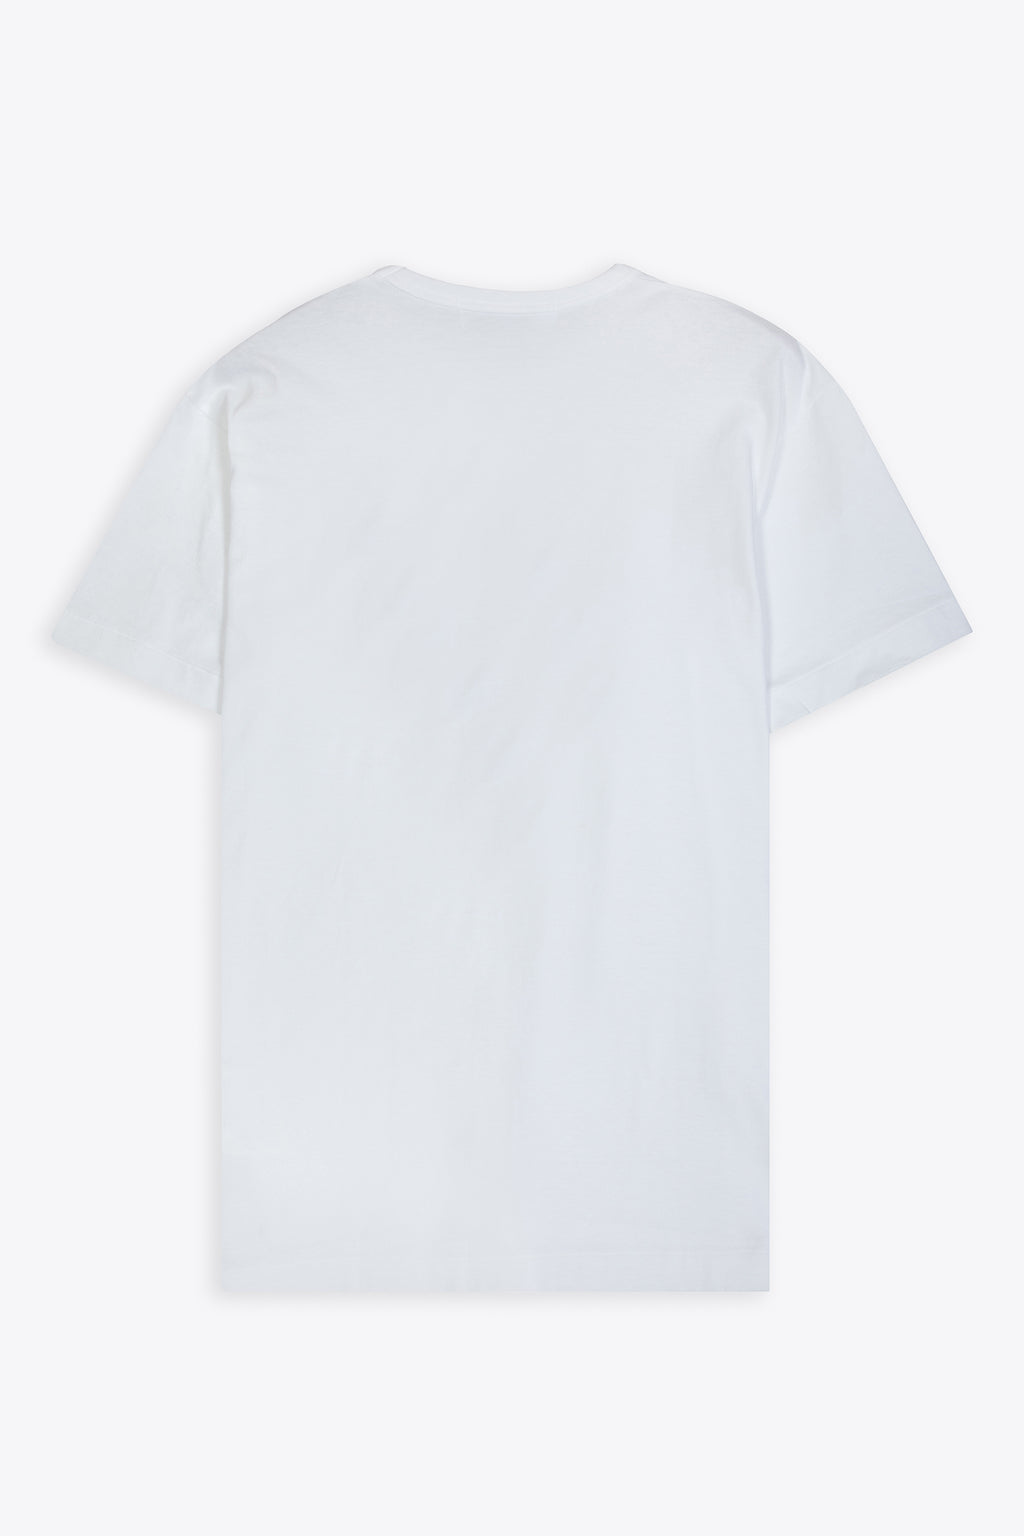 alt-image__White-cotton-t-shirt-with-logo-print-
